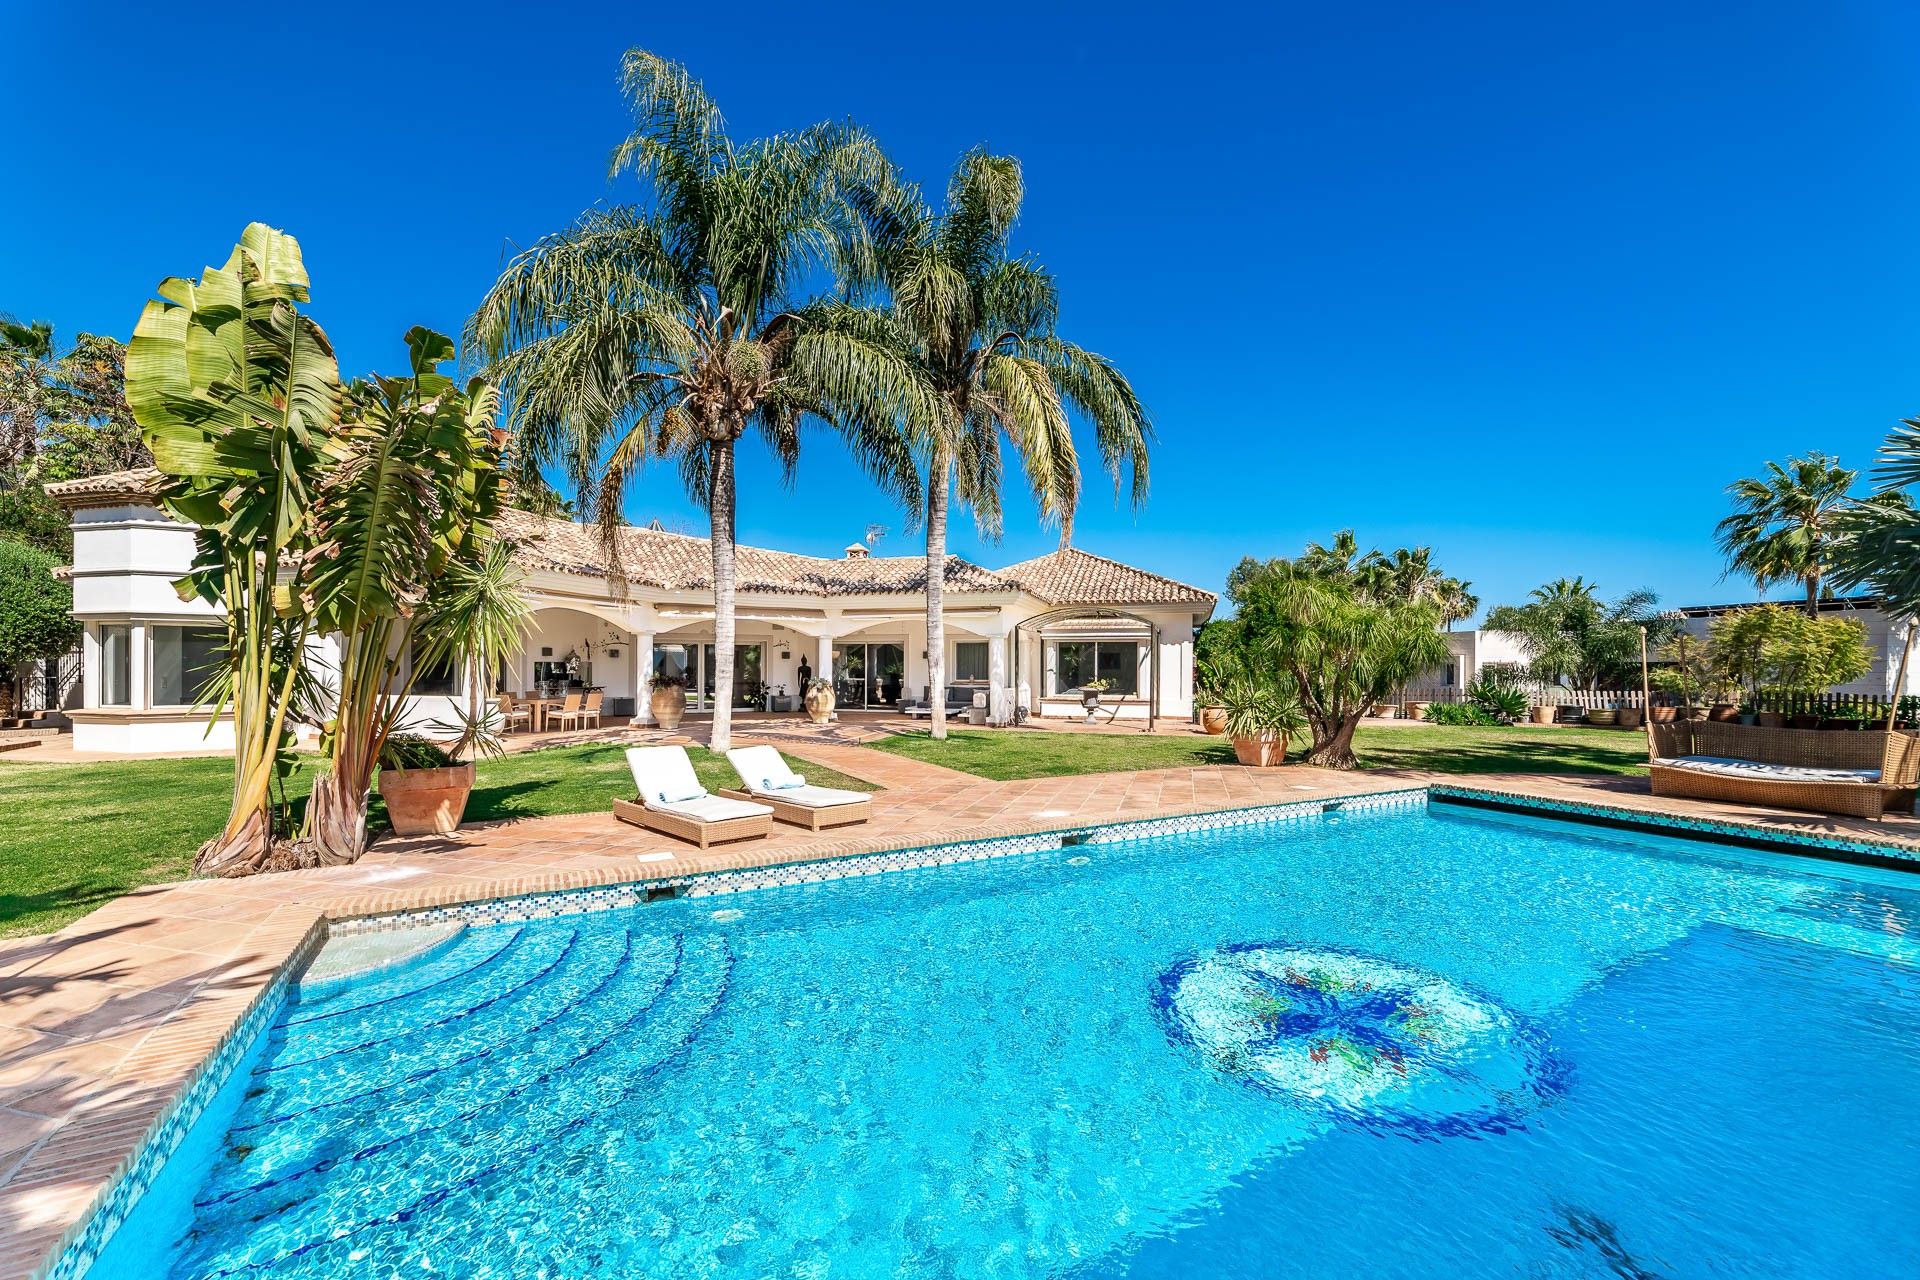 Enourmous villa in the most secured location | Engel & Völkers Marbella